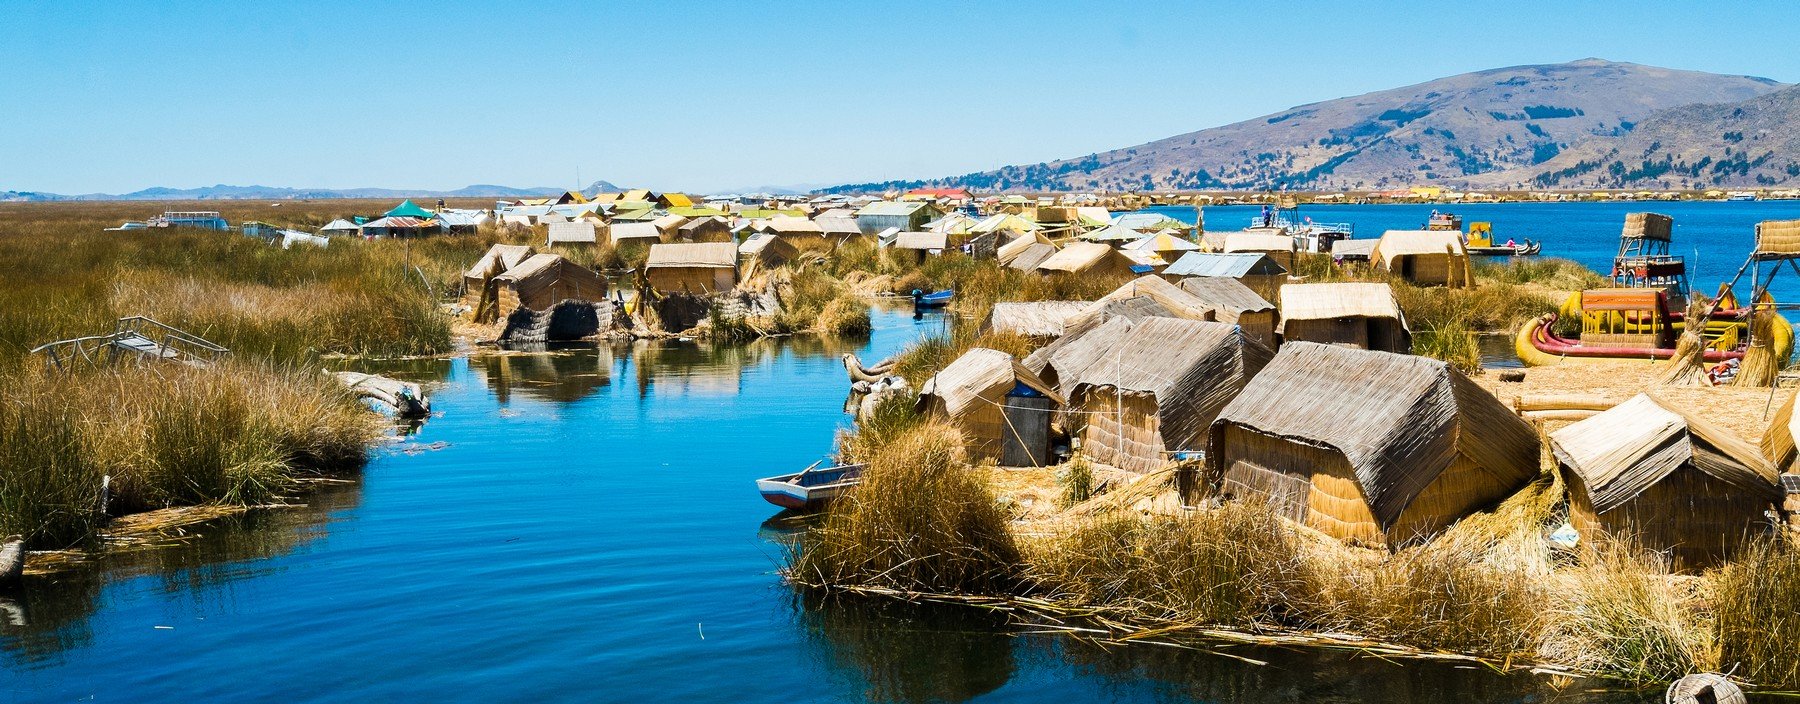 pe, titicaca lake, uros islands (4).jpg